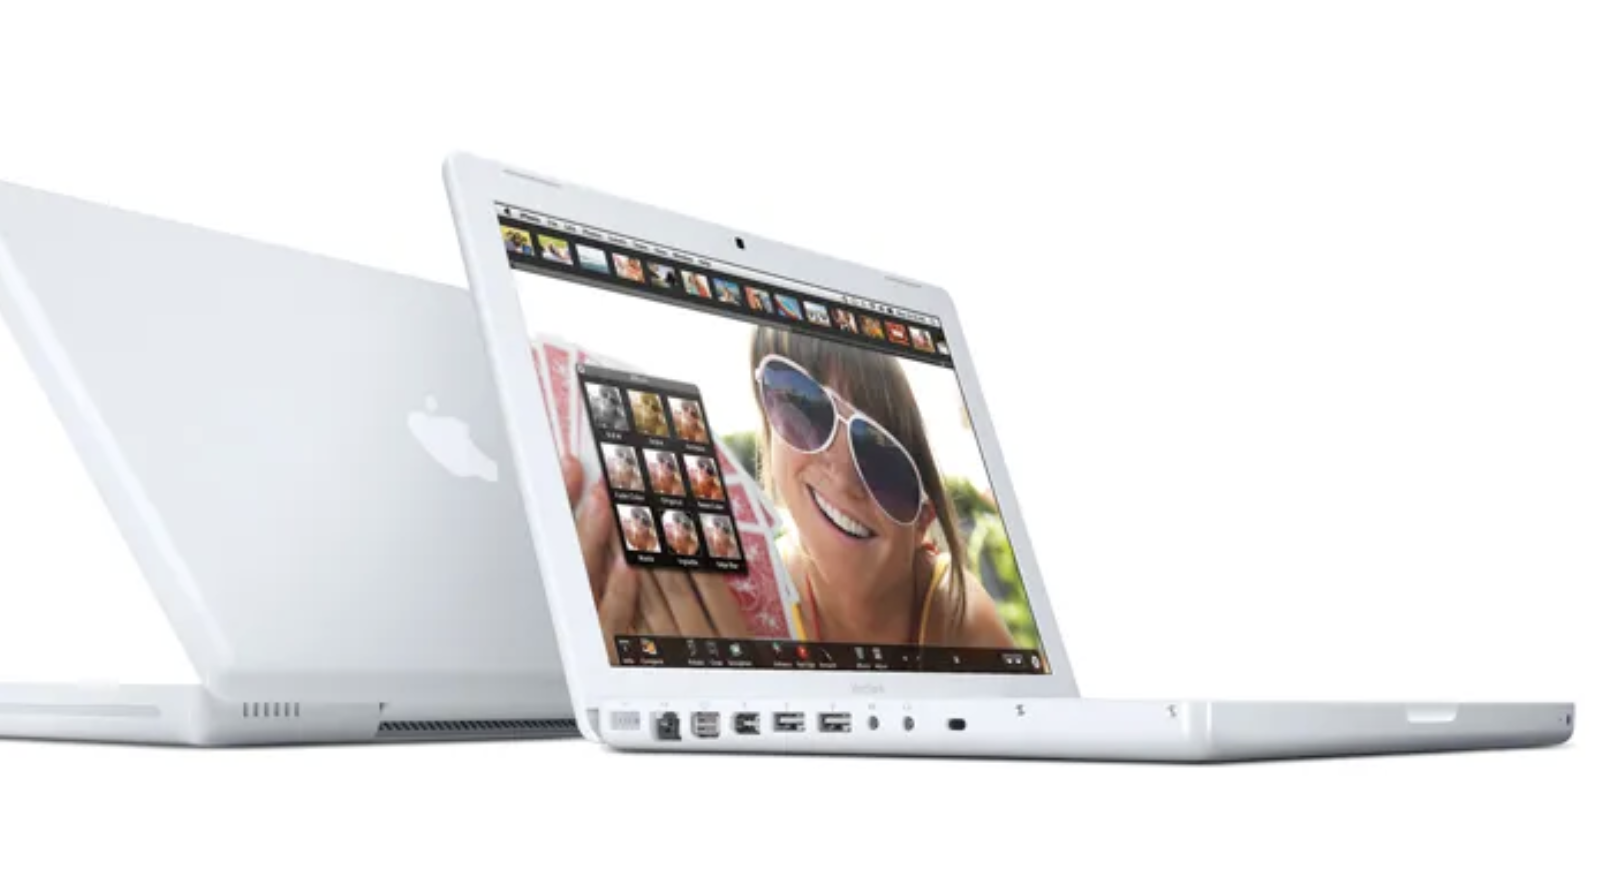 Apple's 2009 MacBook 2.13GHz on white background